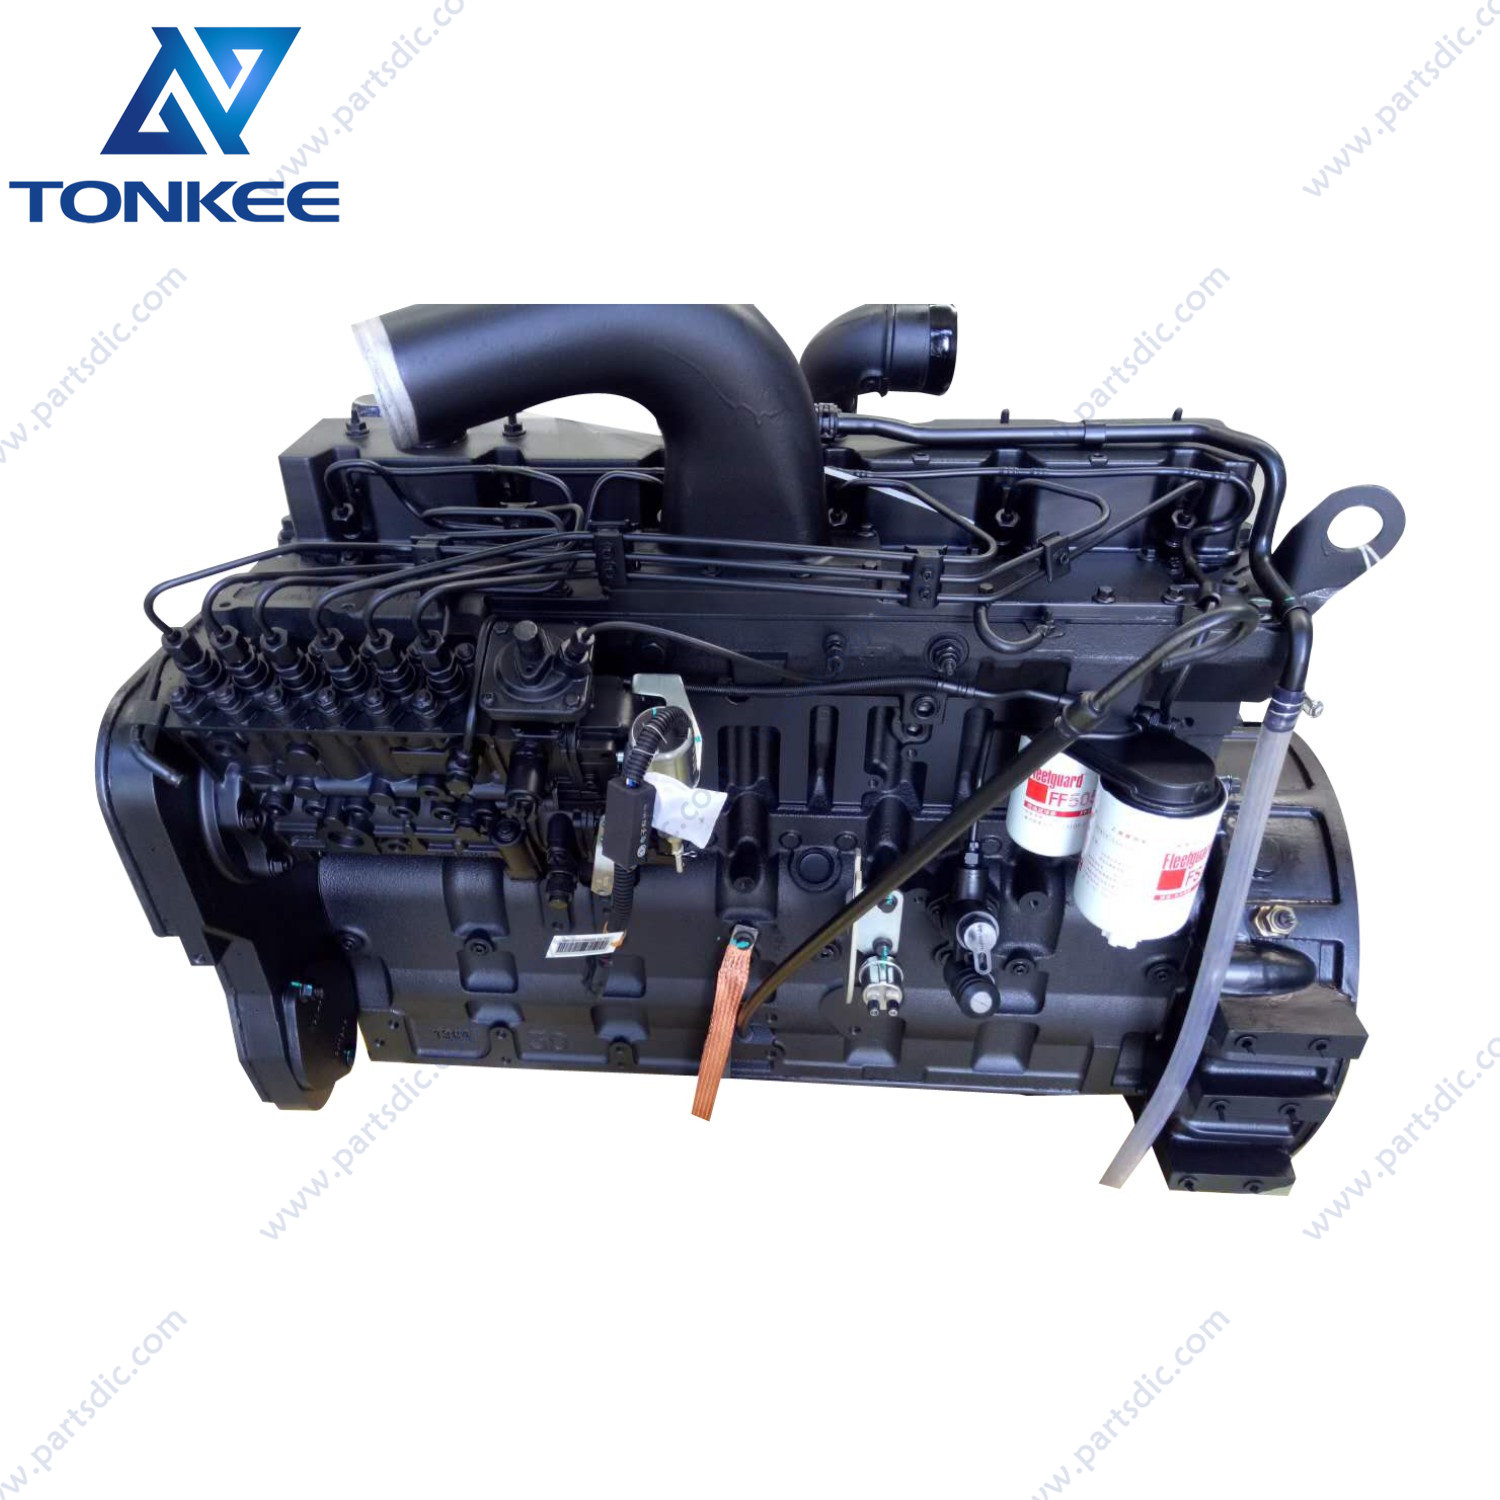 SAA6D114E-2 6D114 6CT8.3 6C8.3 180KW 2200RPM diesel engine assy PC300-7 PC300LC-7 excavator complete engine assy